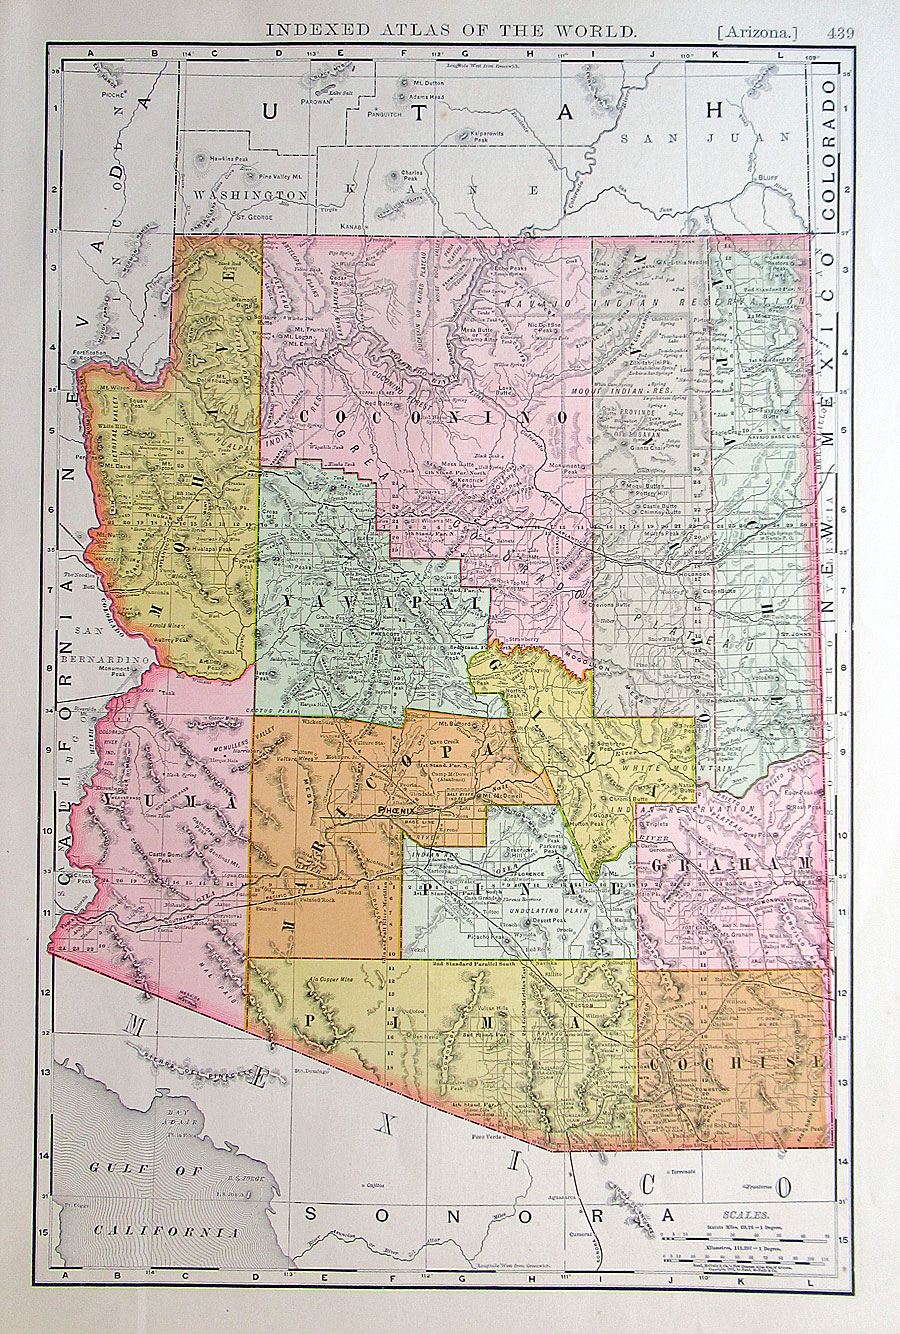 c 1895 Rand, McNally & Co map of Arizona Territory